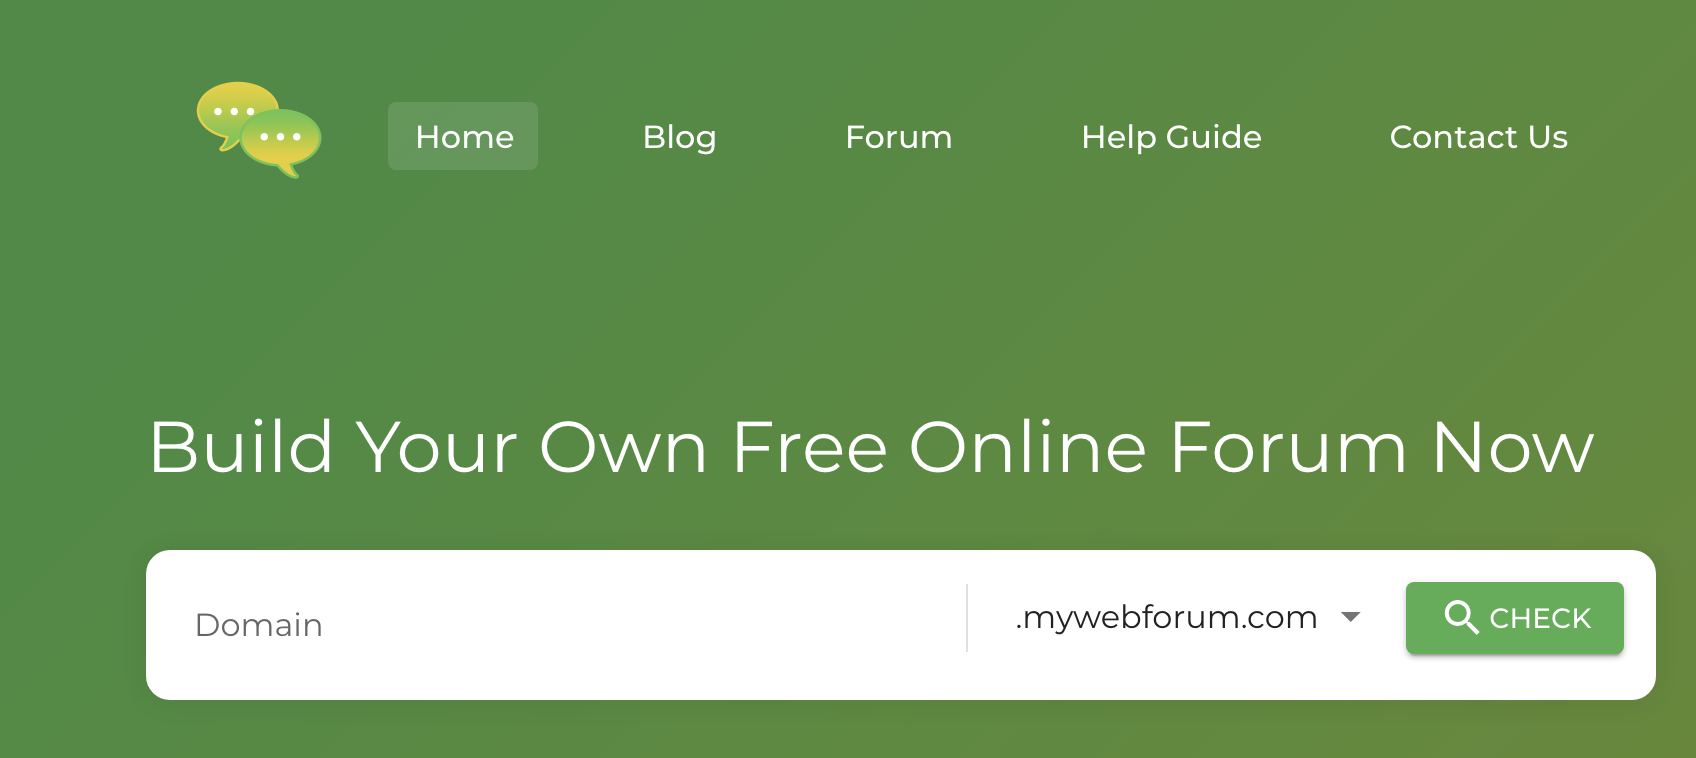 Mywebforum.com